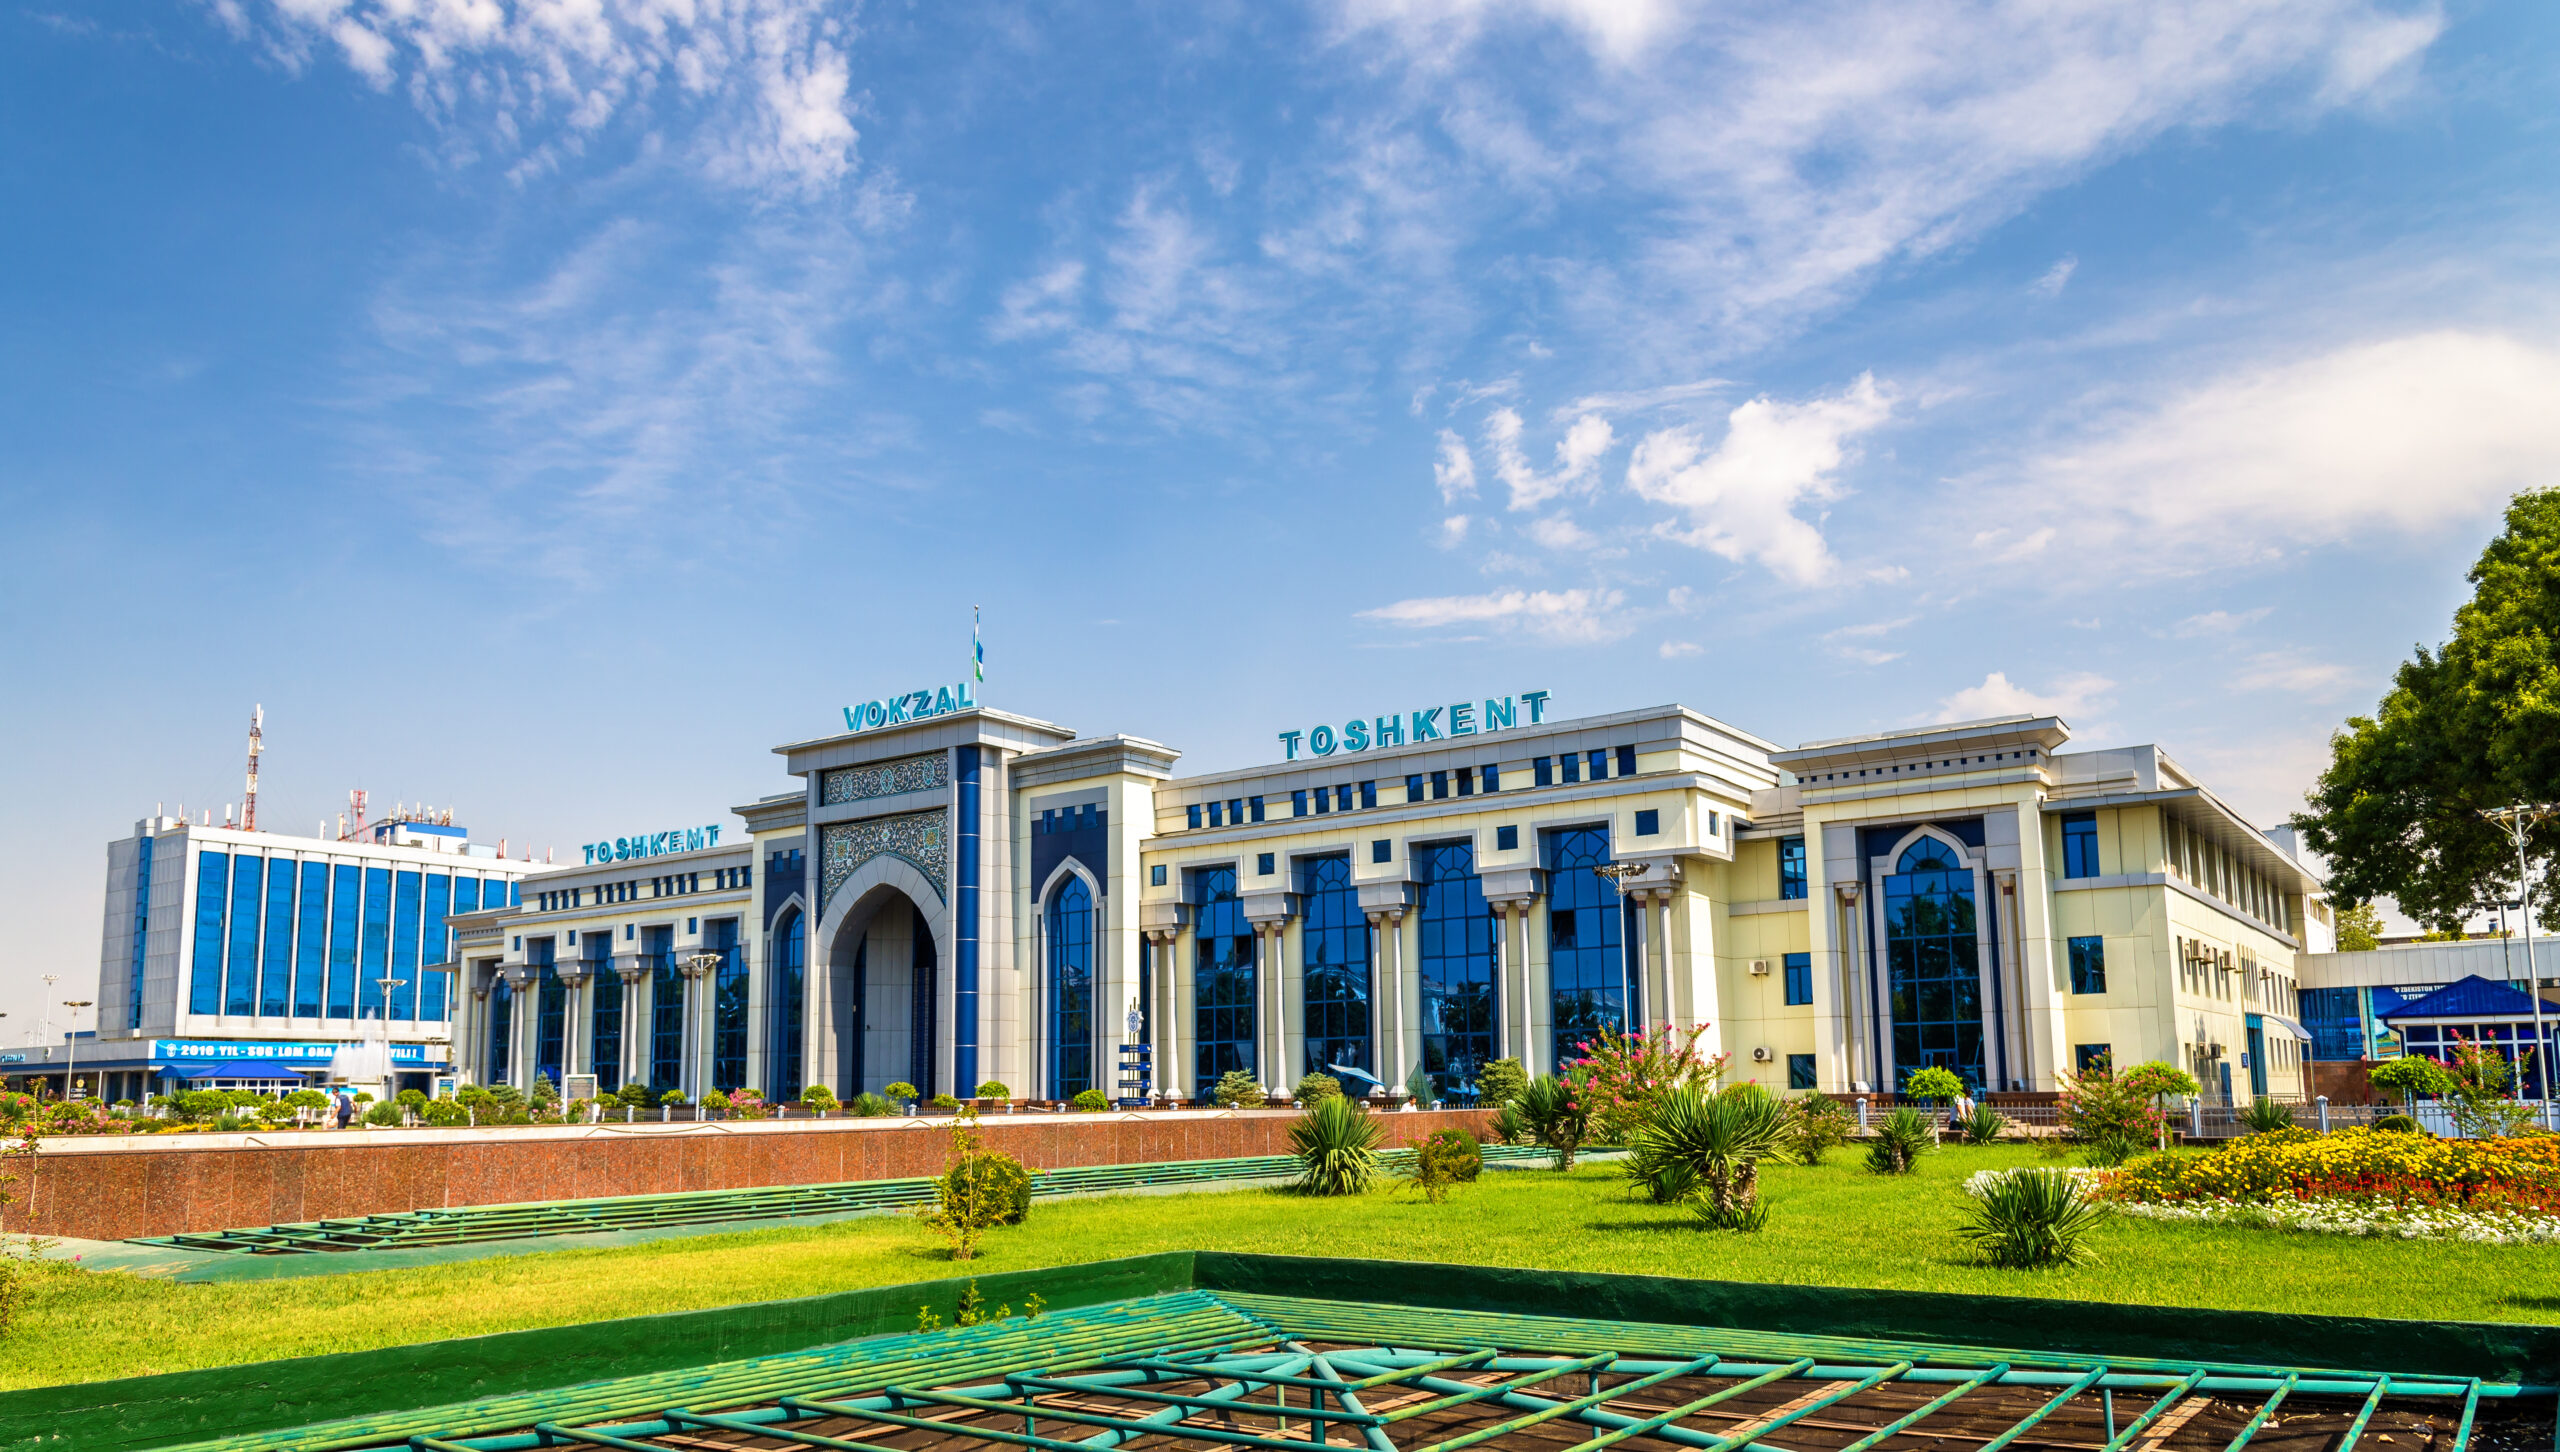 Railway Uzbekistan - Partnership continues - Tashkent Railway Station